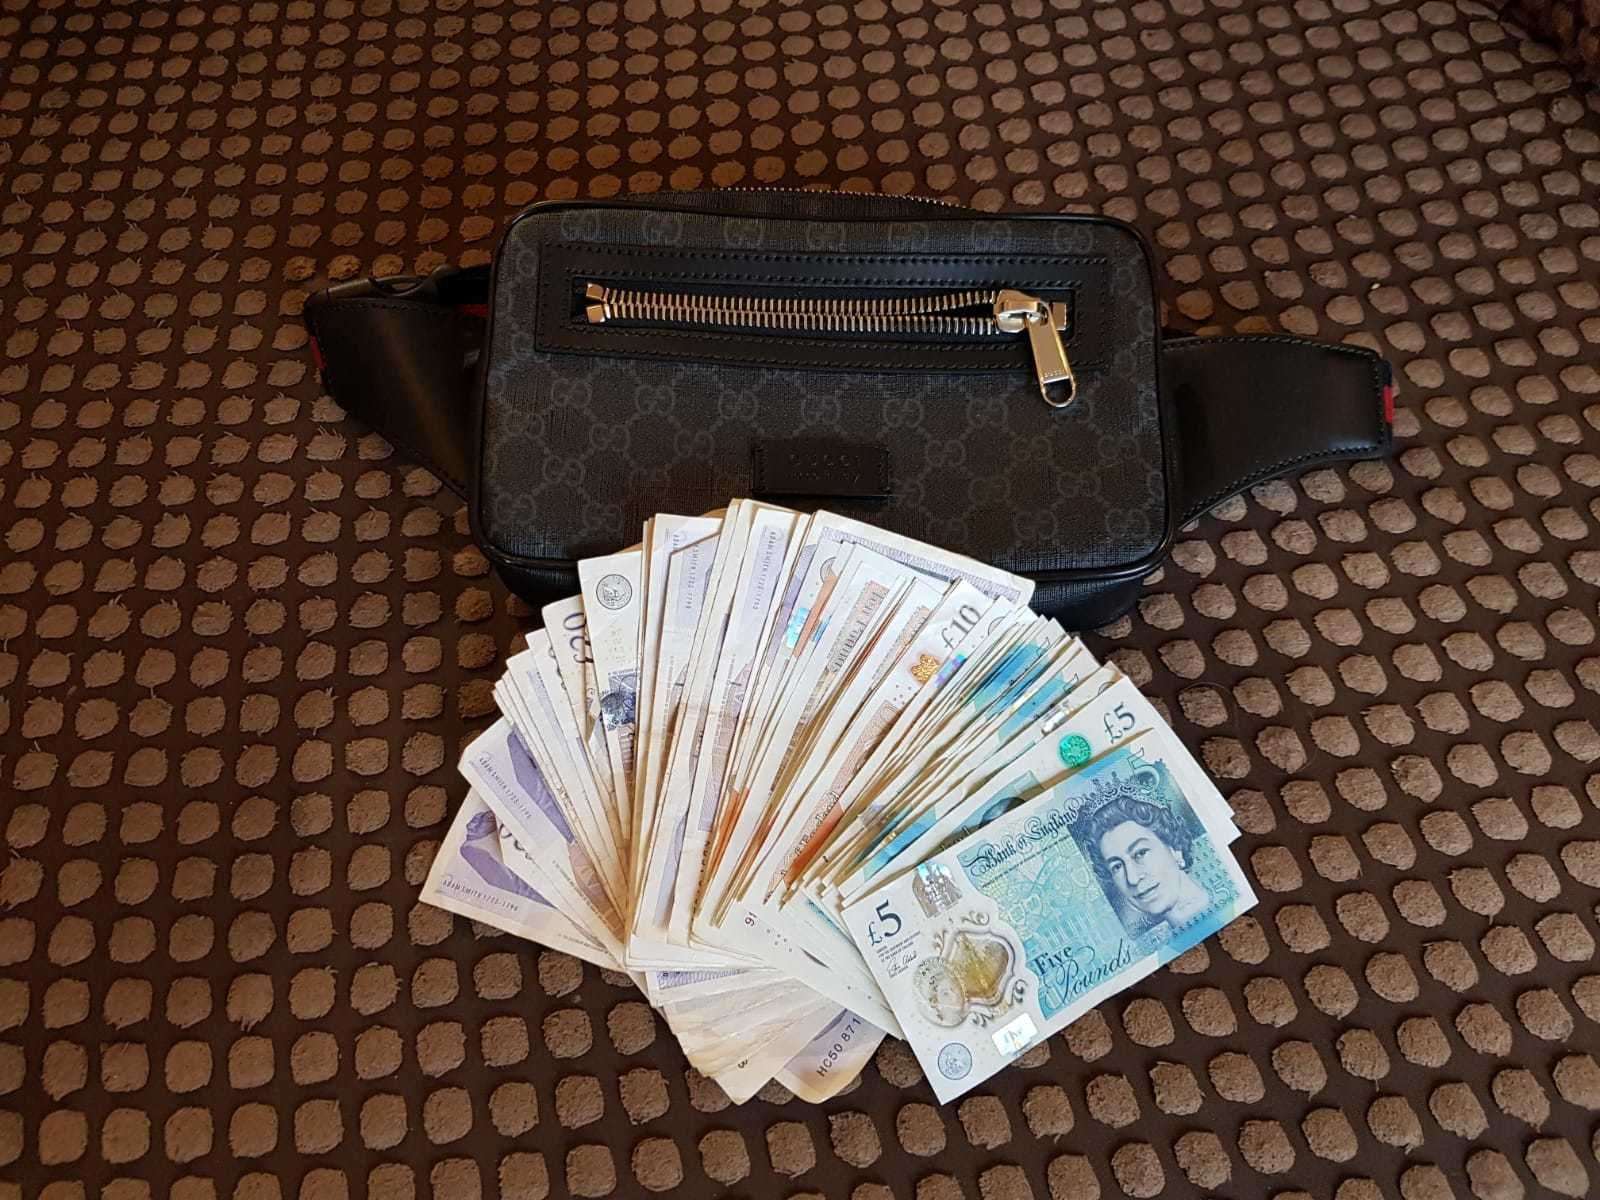 Cash seized during the raids